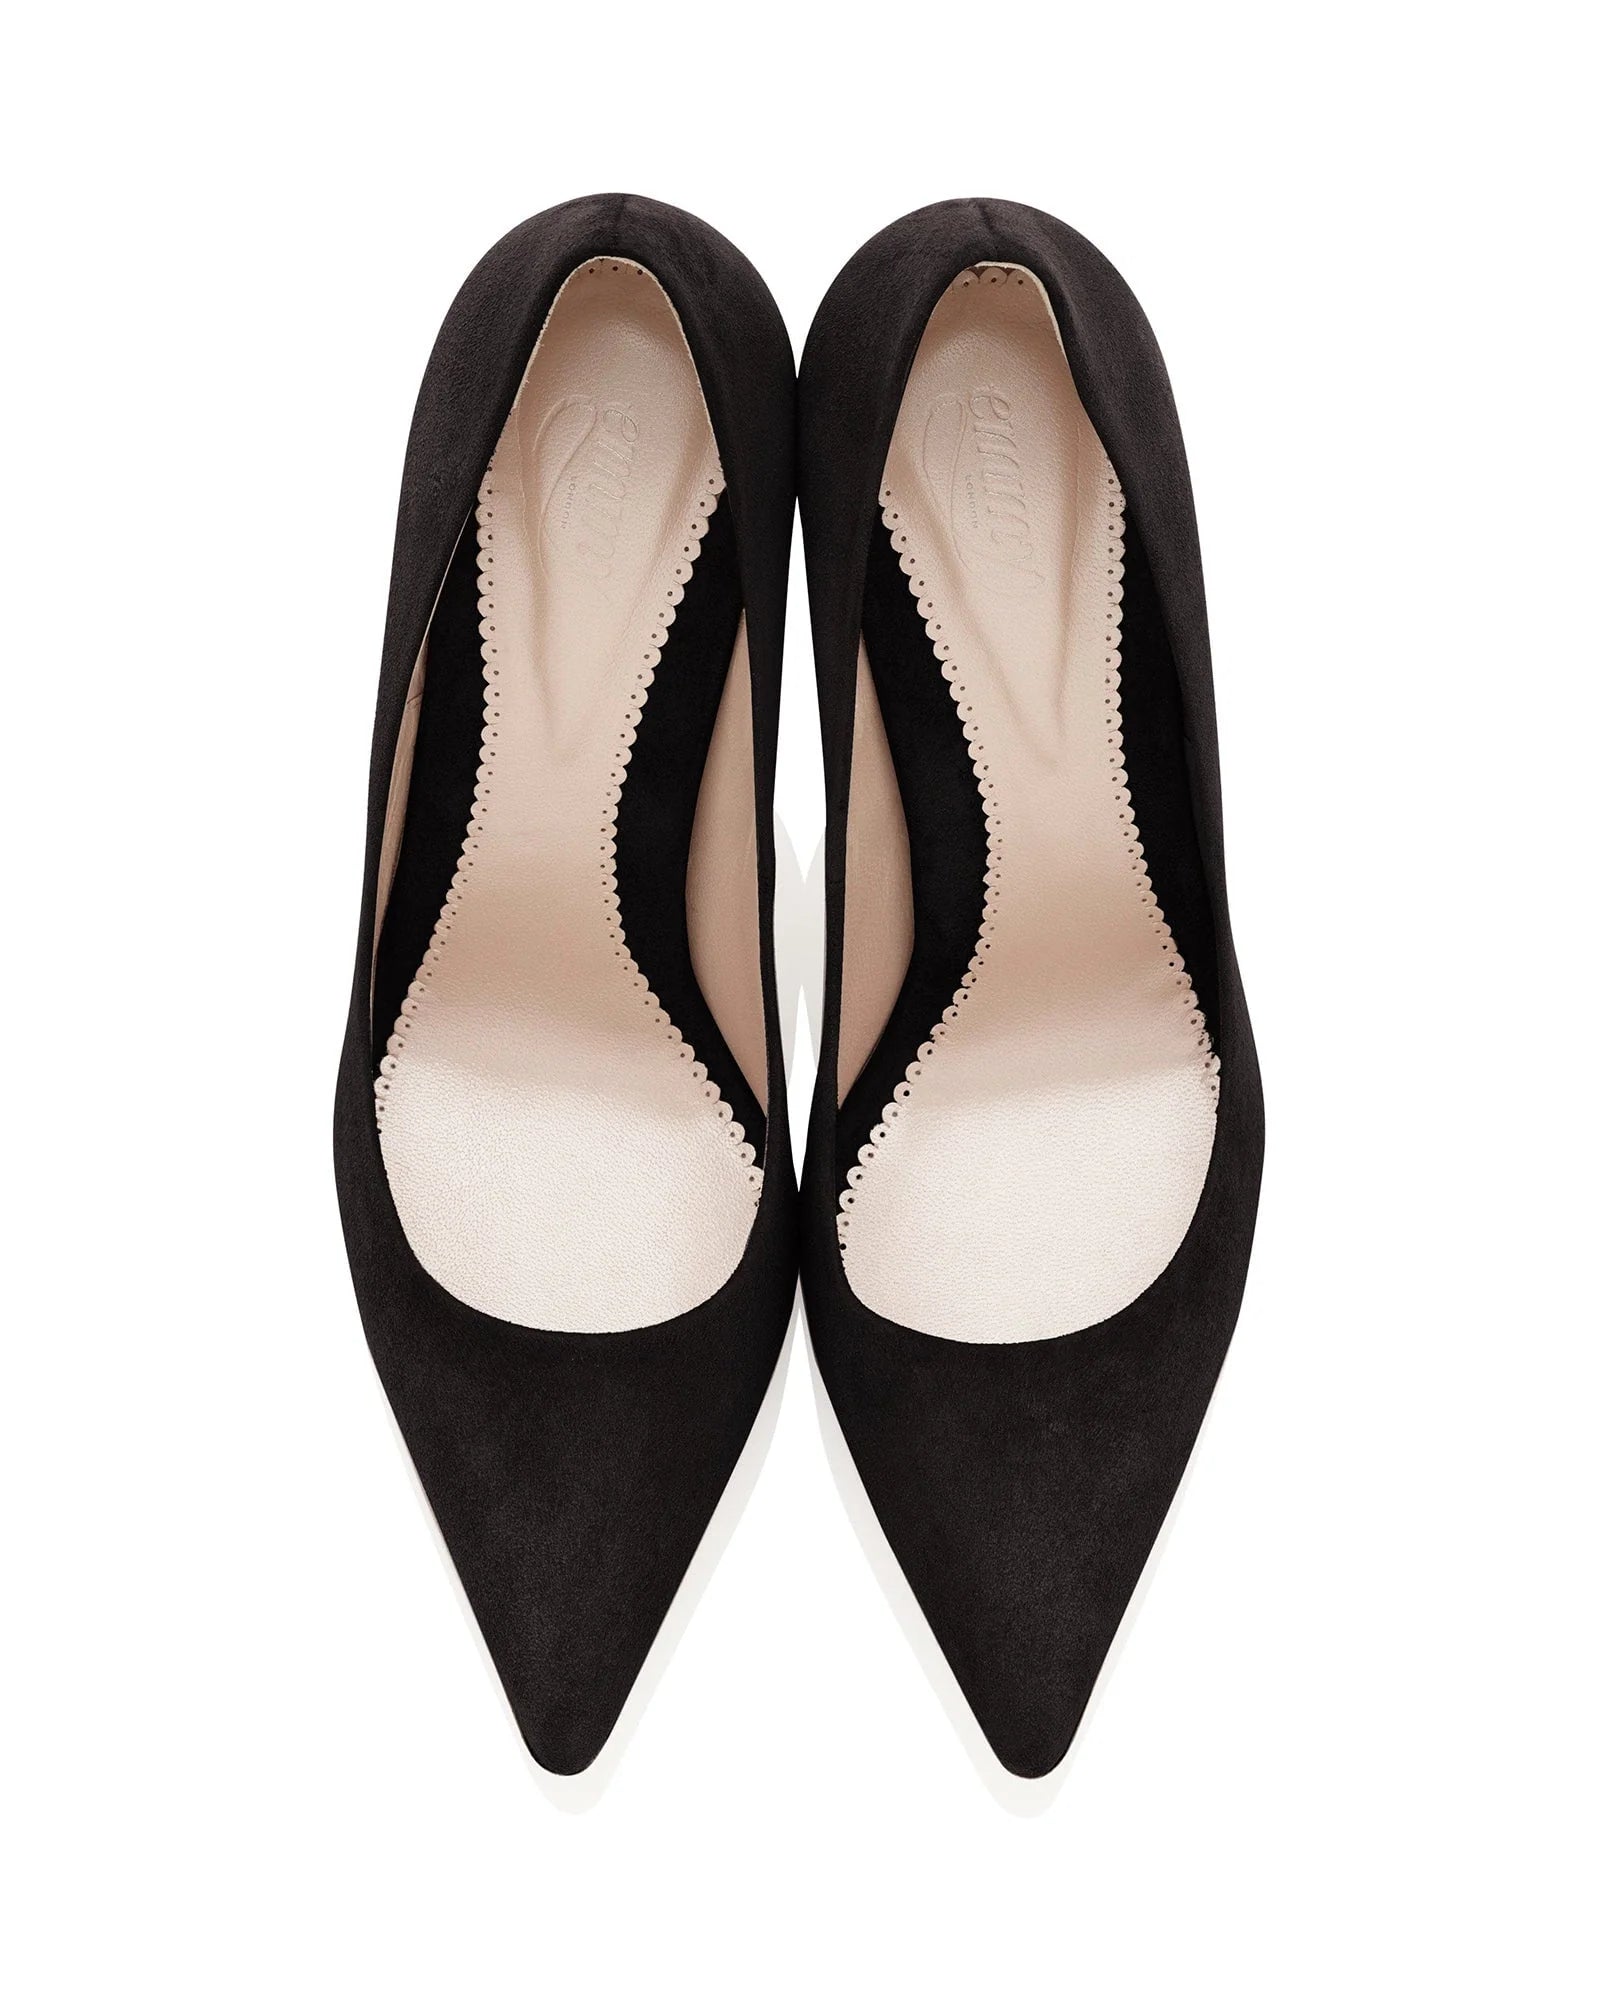 Claudia Mid Heel Fashion Shoe Jet Black Court Shoe  image